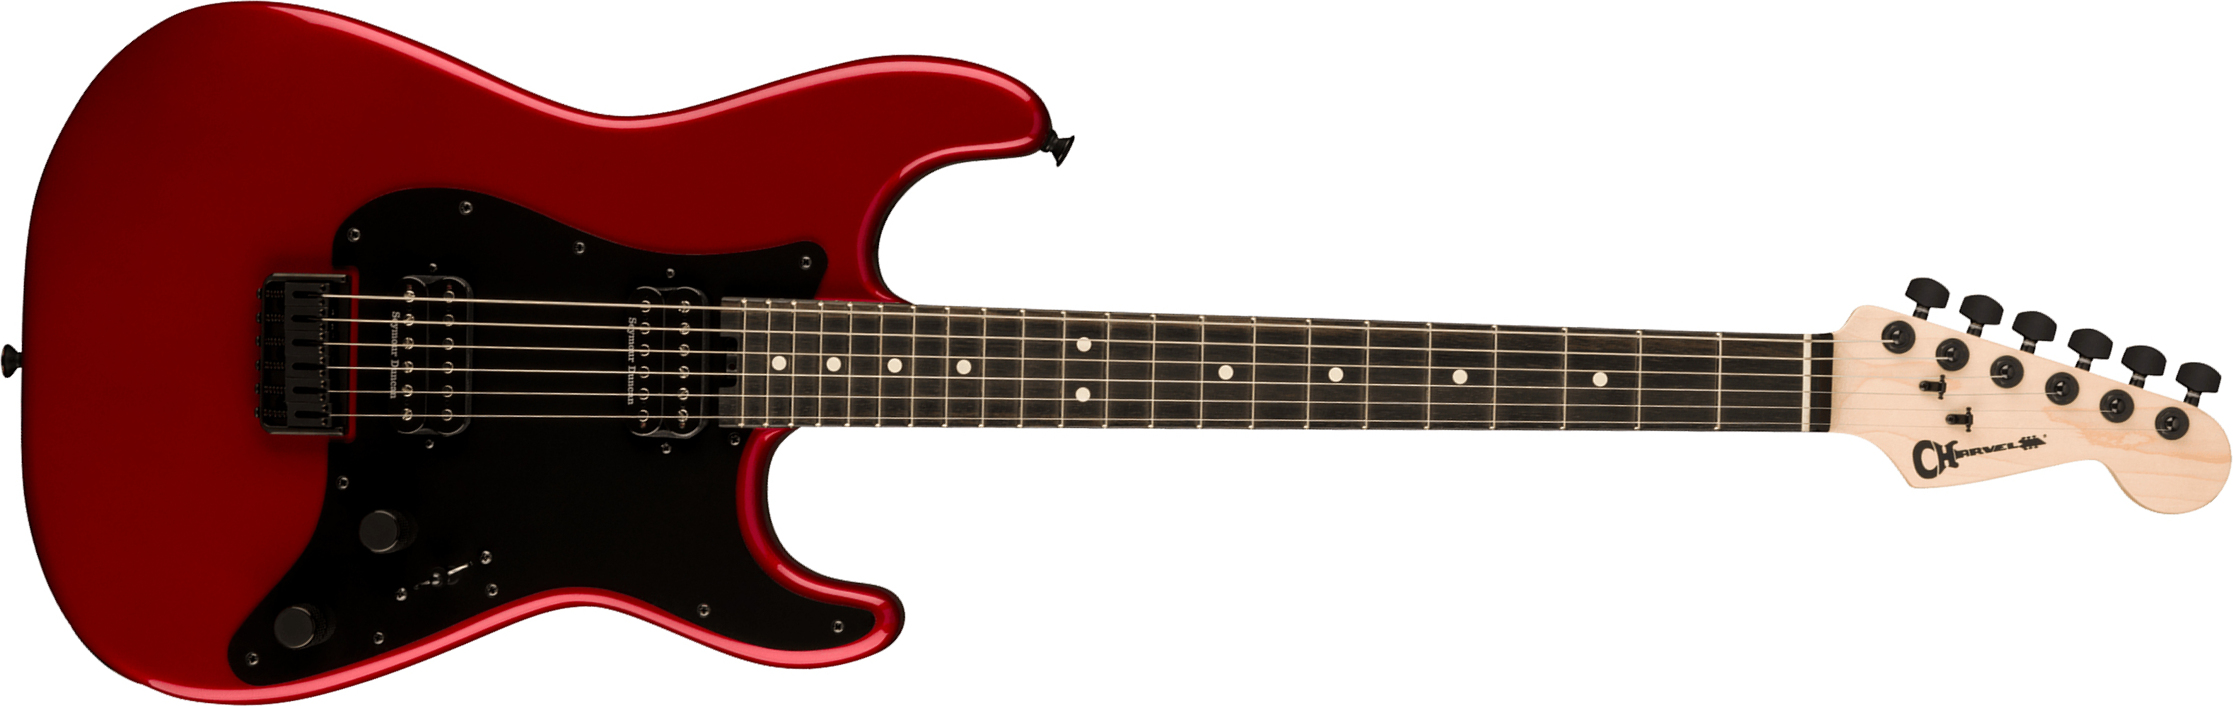 Charvel So-cal Style 1 Hh Ht E Pro-mod 2h Seymour Duncan Eb - Candy Apple Red - Elektrische gitaar in Str-vorm - Main picture